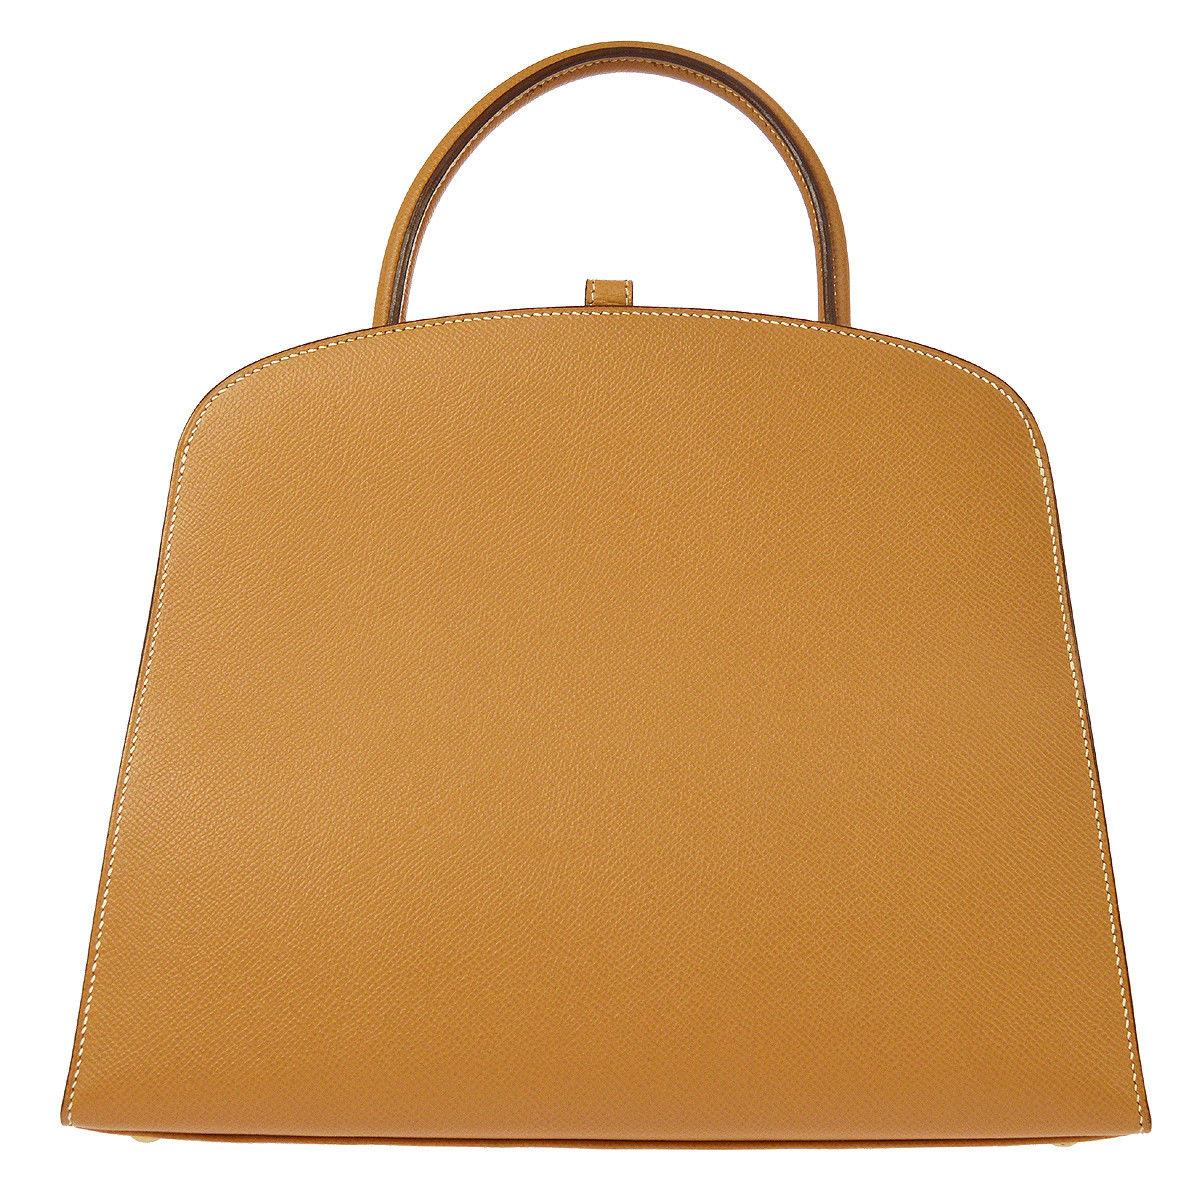 Women's Hermes Cognac Tan Leather Gold Top Handle Satchel Tote Bag